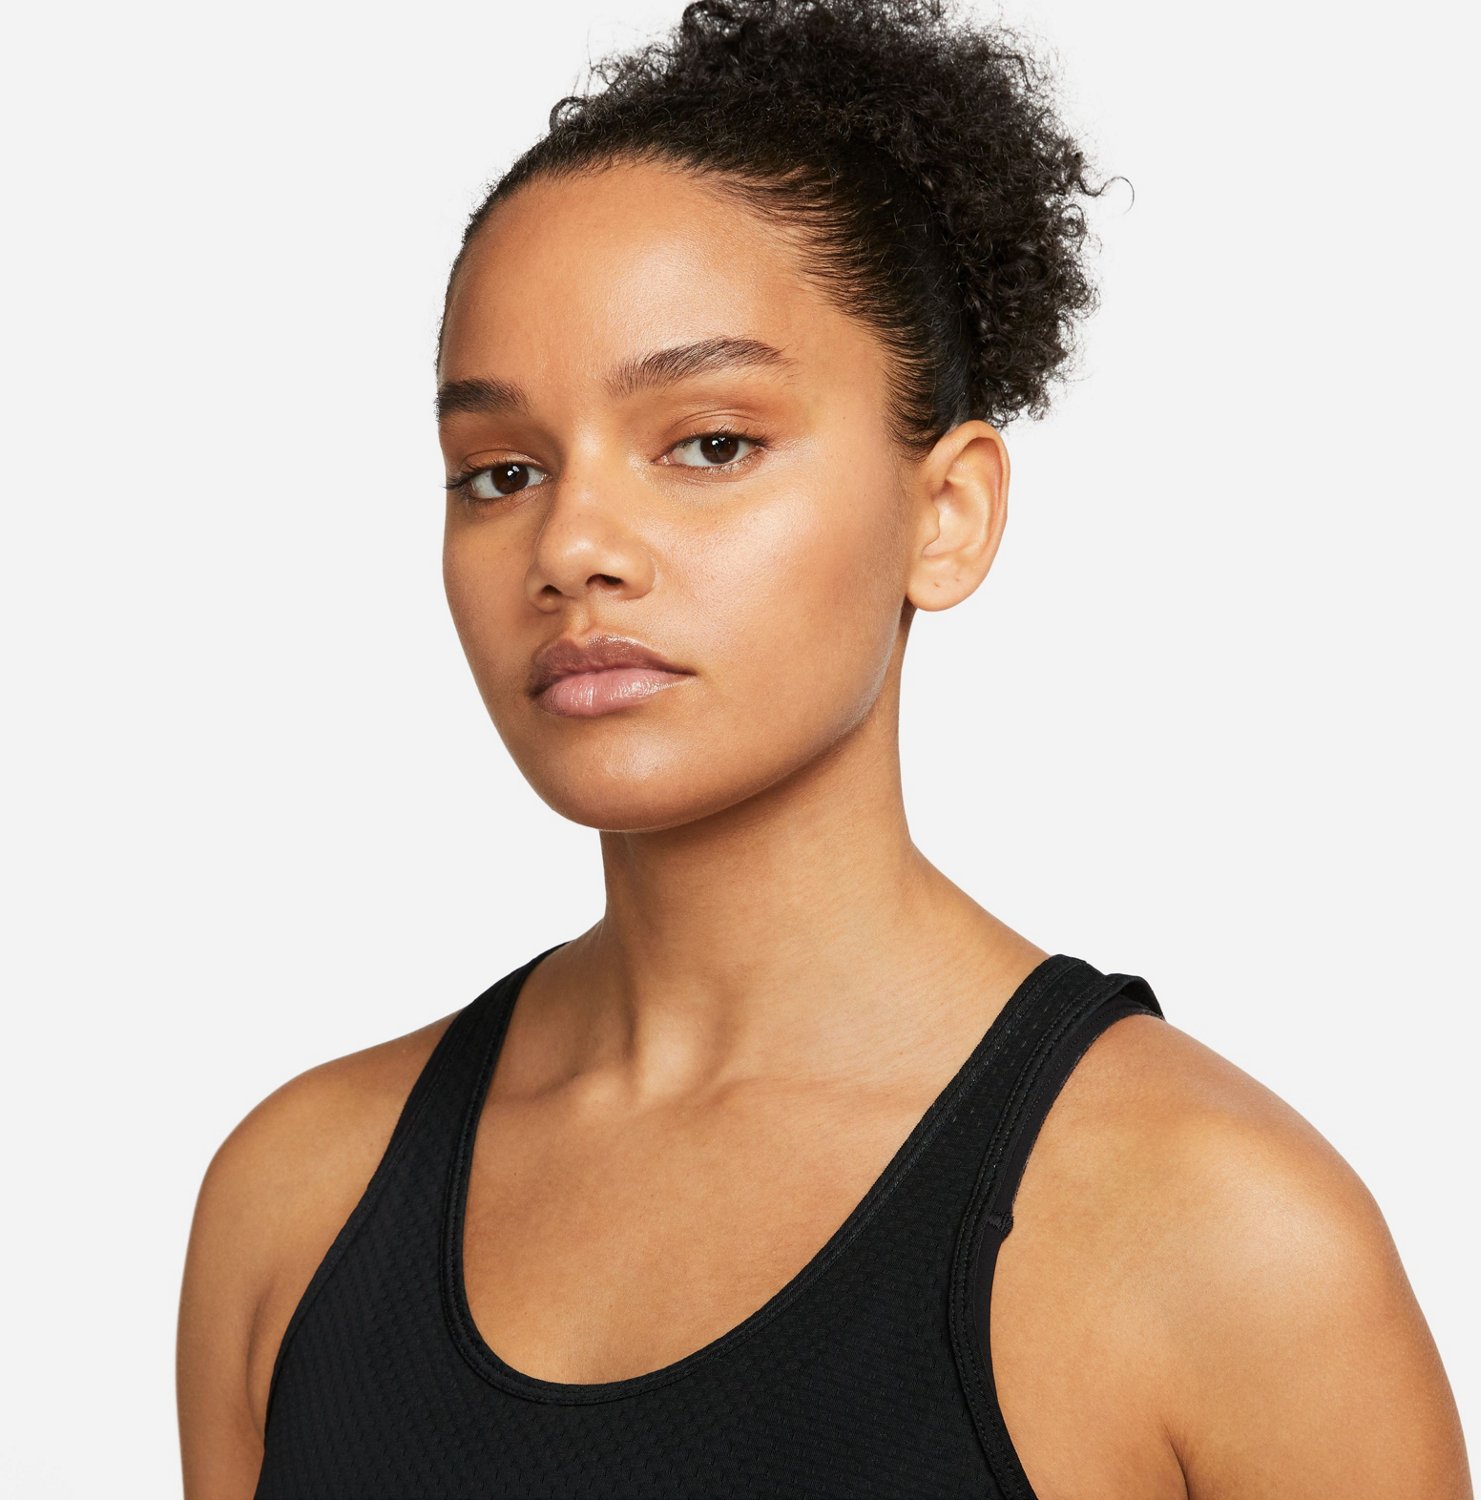 Nike Women's Dri-FIT One Breathe Tank Top | Academy